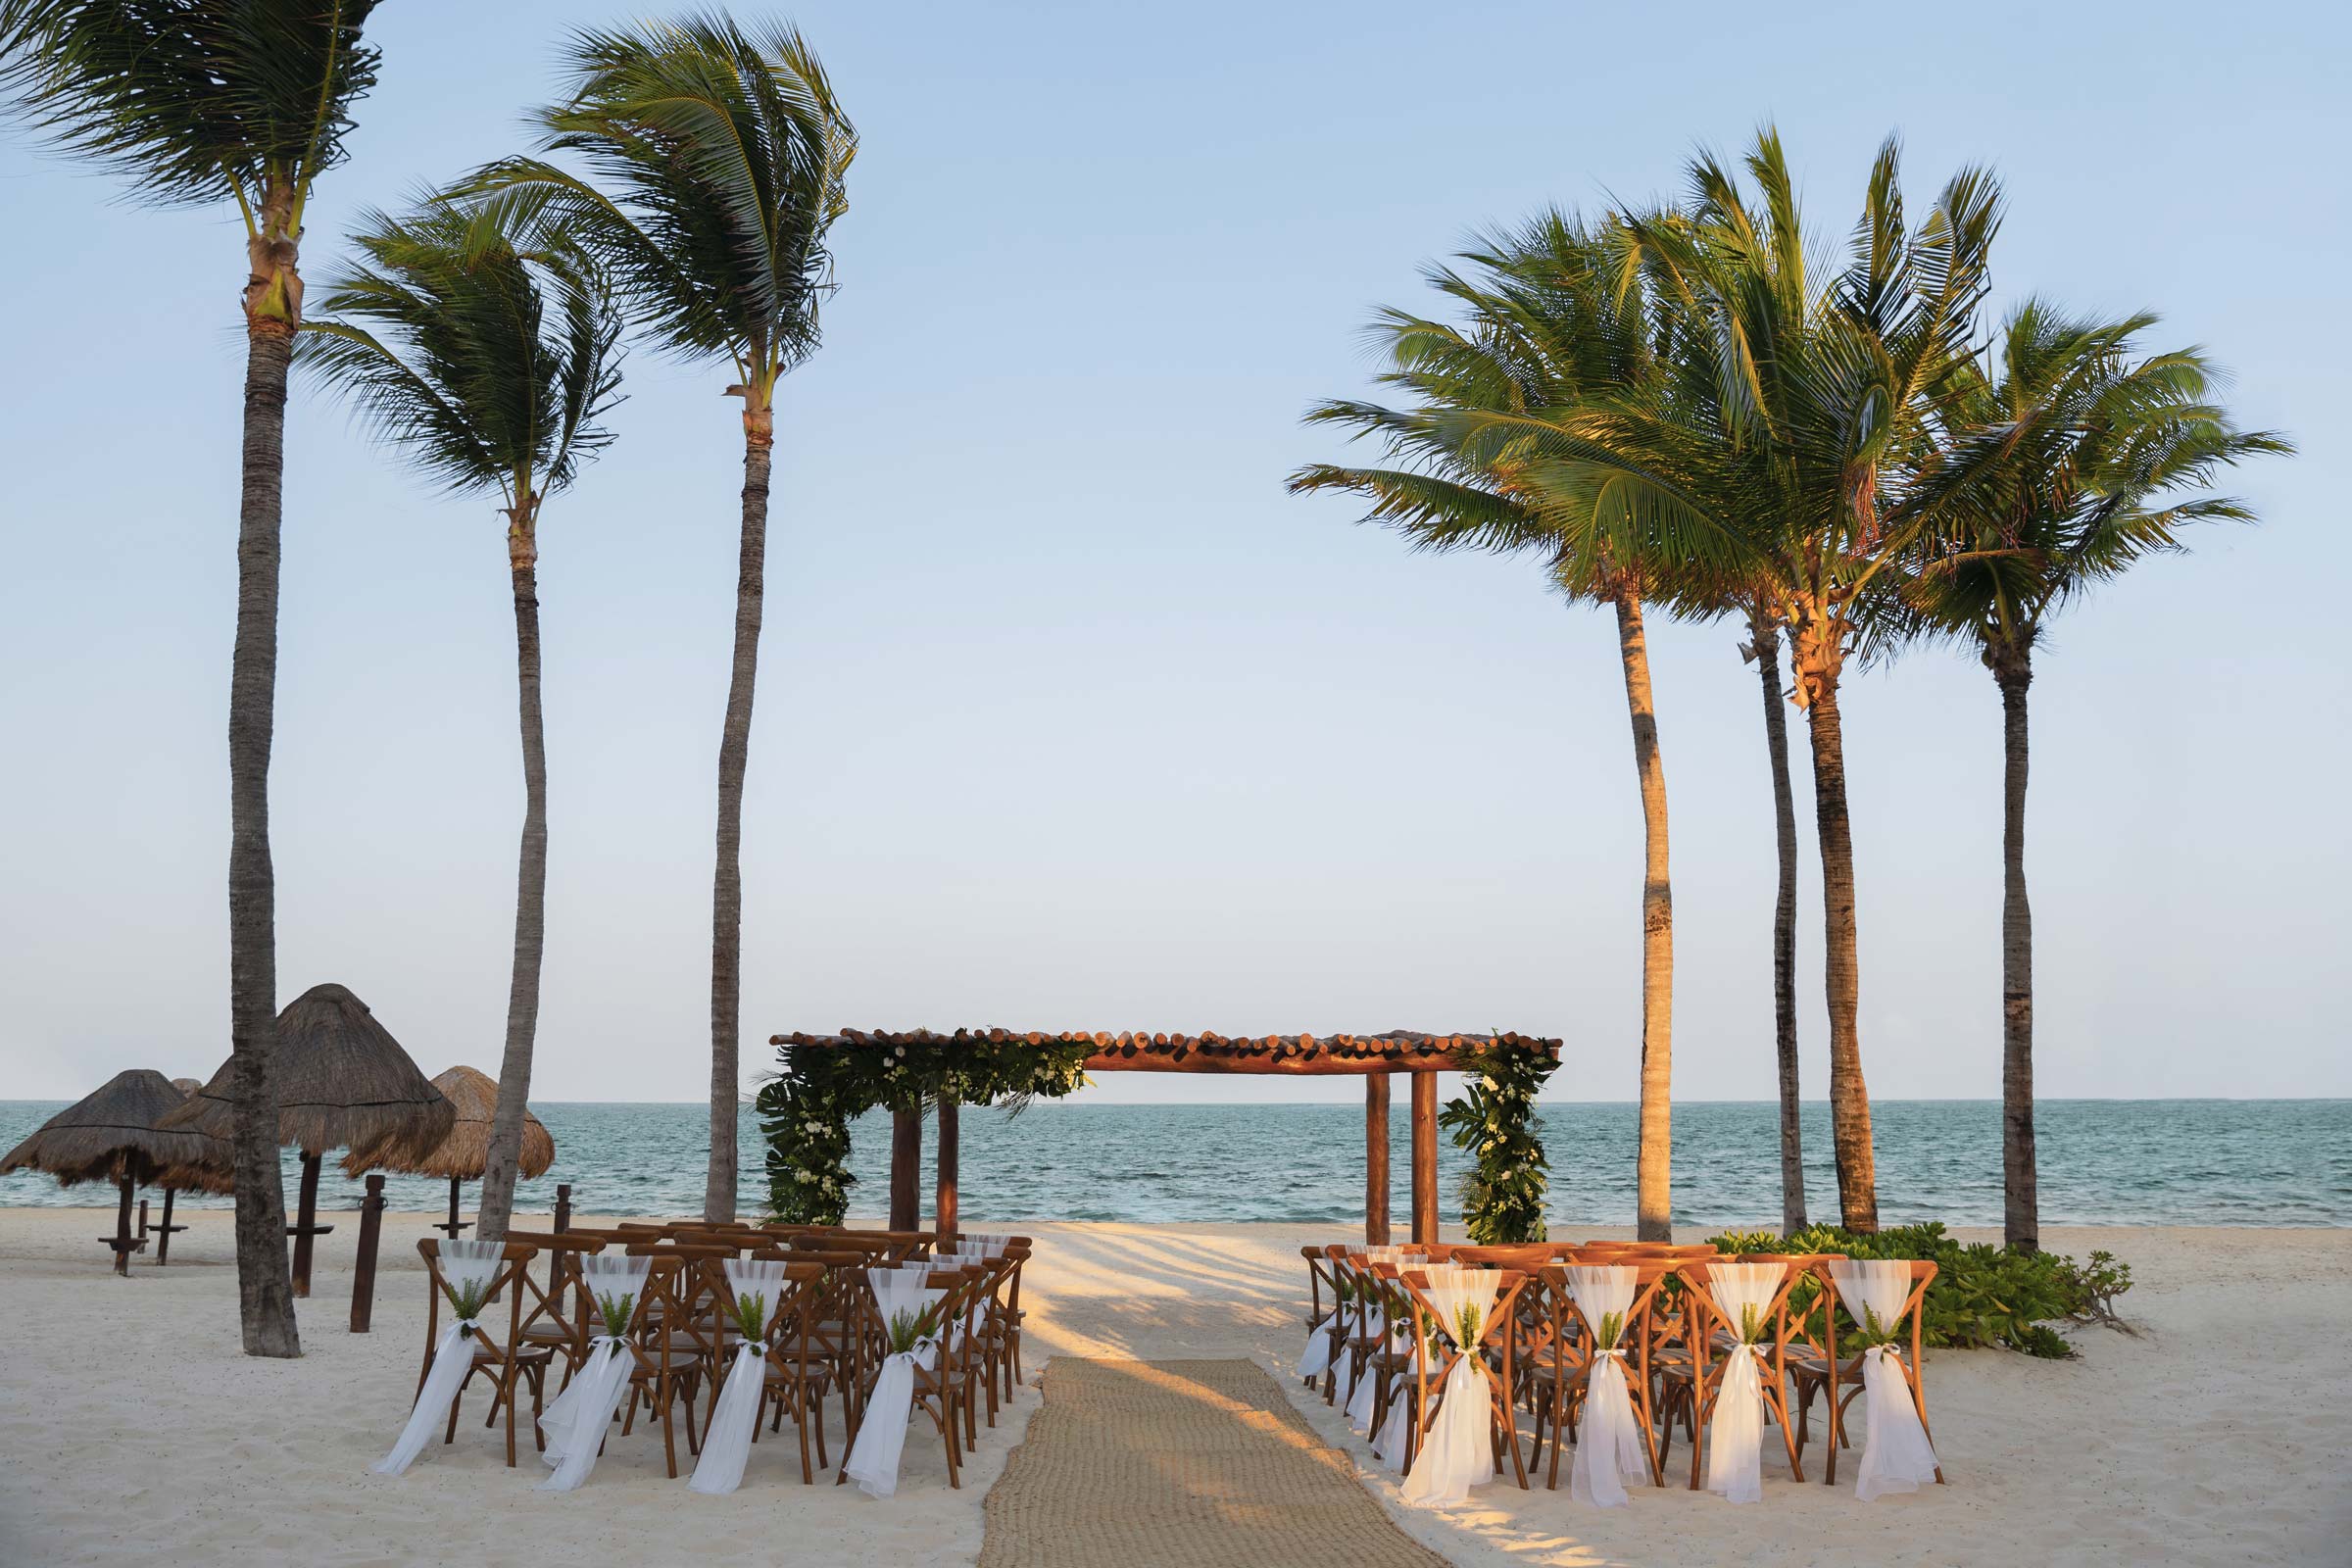 Beach wedding arrangements in Excellence Riviera Cancun